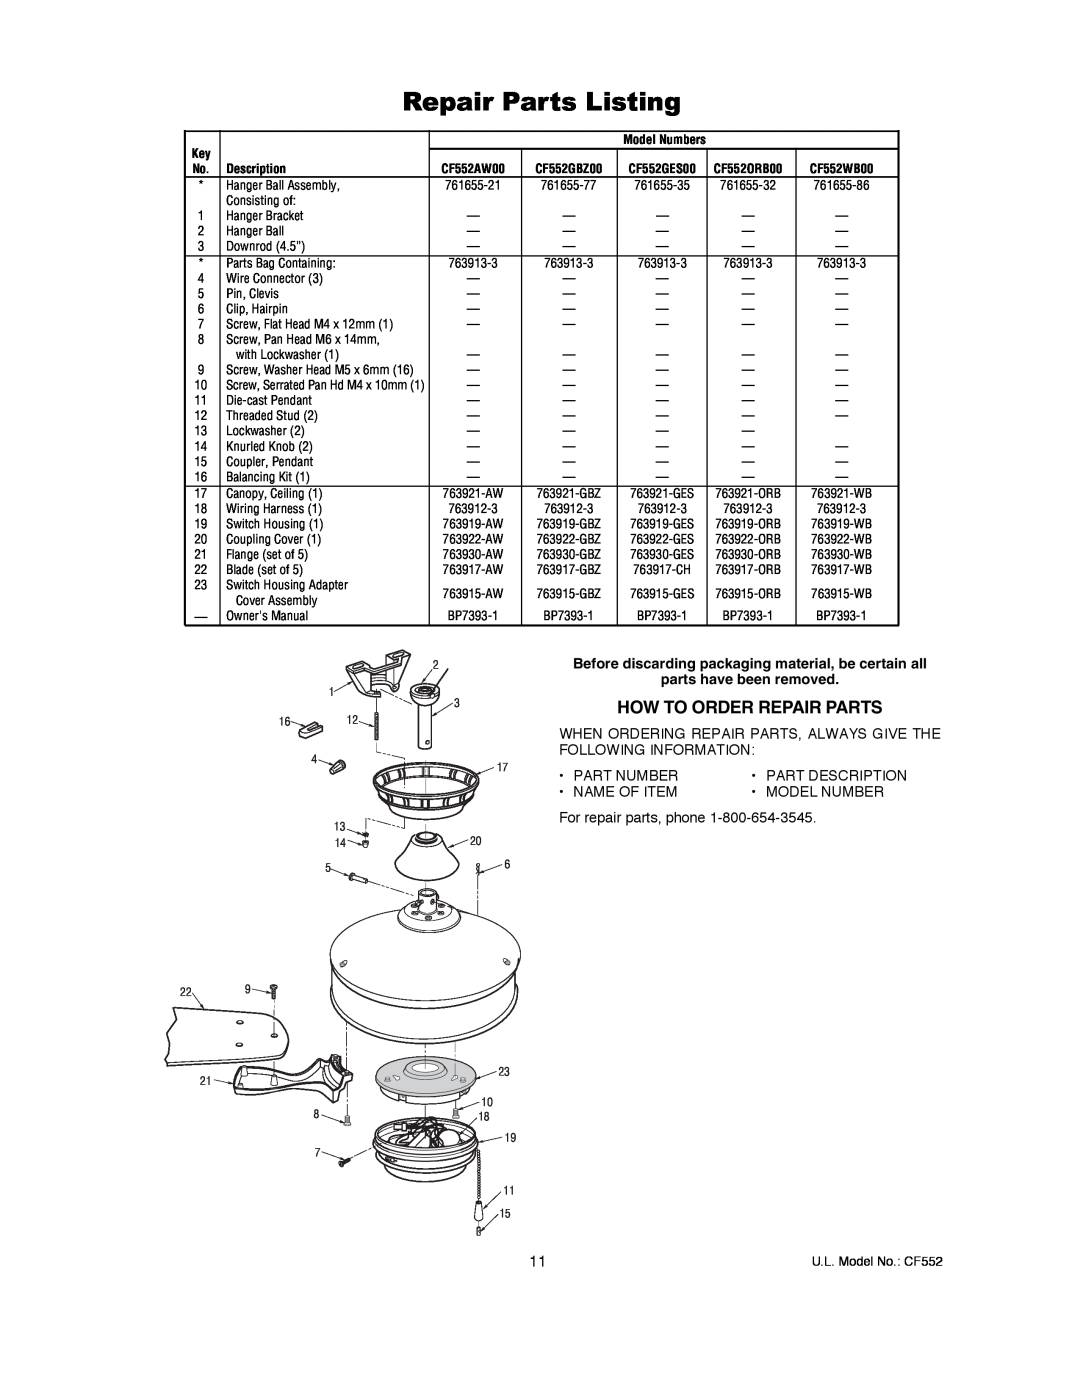 Emerson CF552AW00, CF552GES00, CF552ORB00, CF552GBZ00, CF552WB00 owner manual Repair Parts Listing, How To Order Repair Parts 